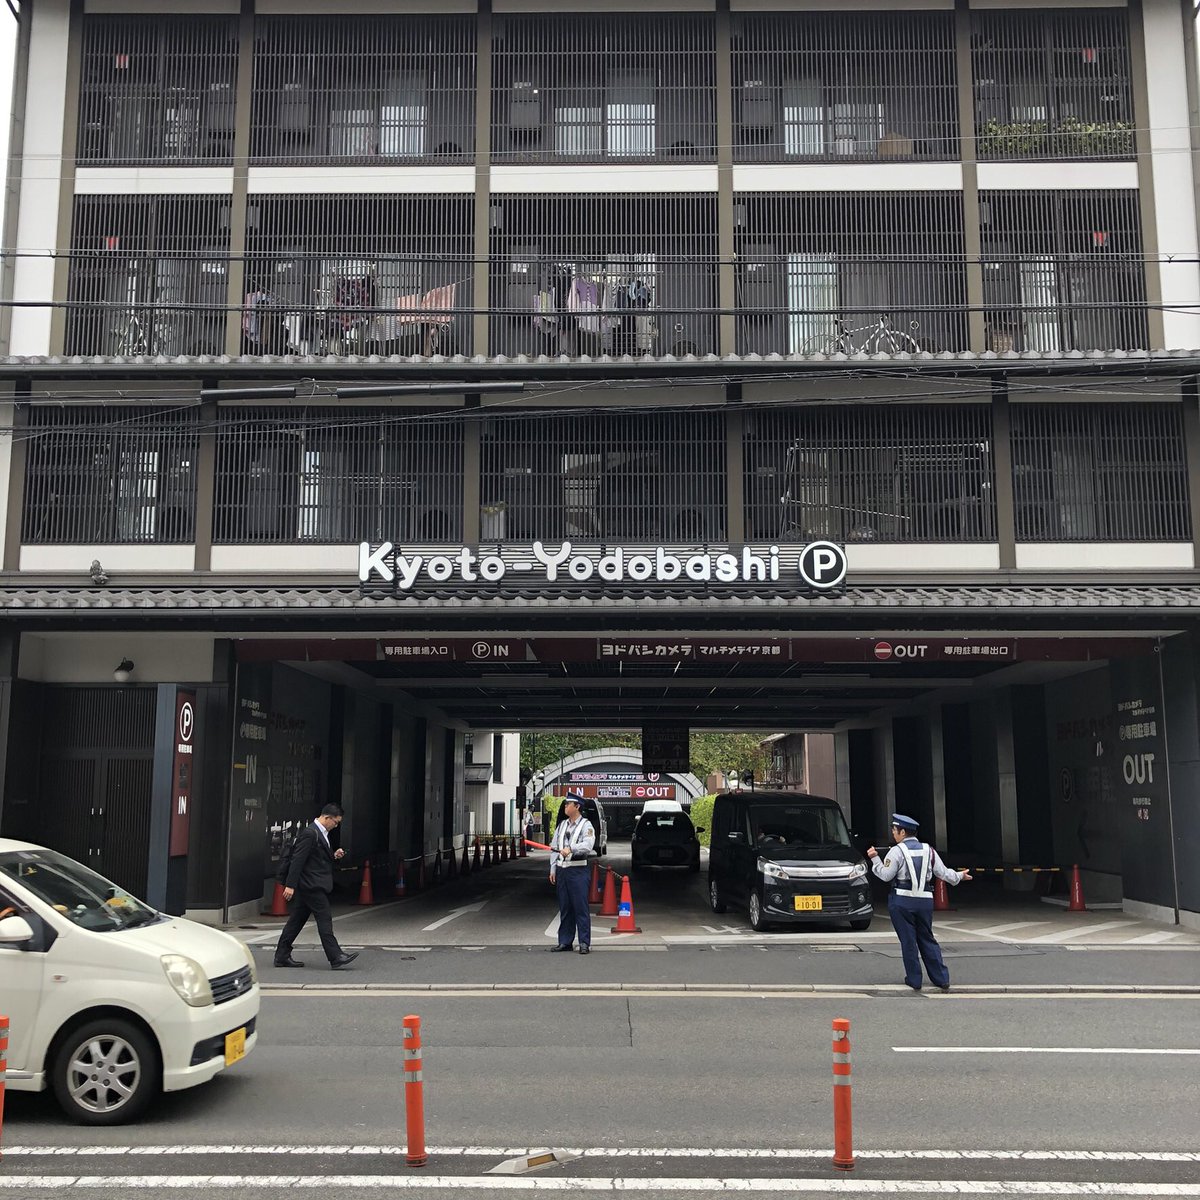 Ouze 力技で大通りから一本奥まったところにある駐車場への導線をつくった京都ヨドバシカメラ